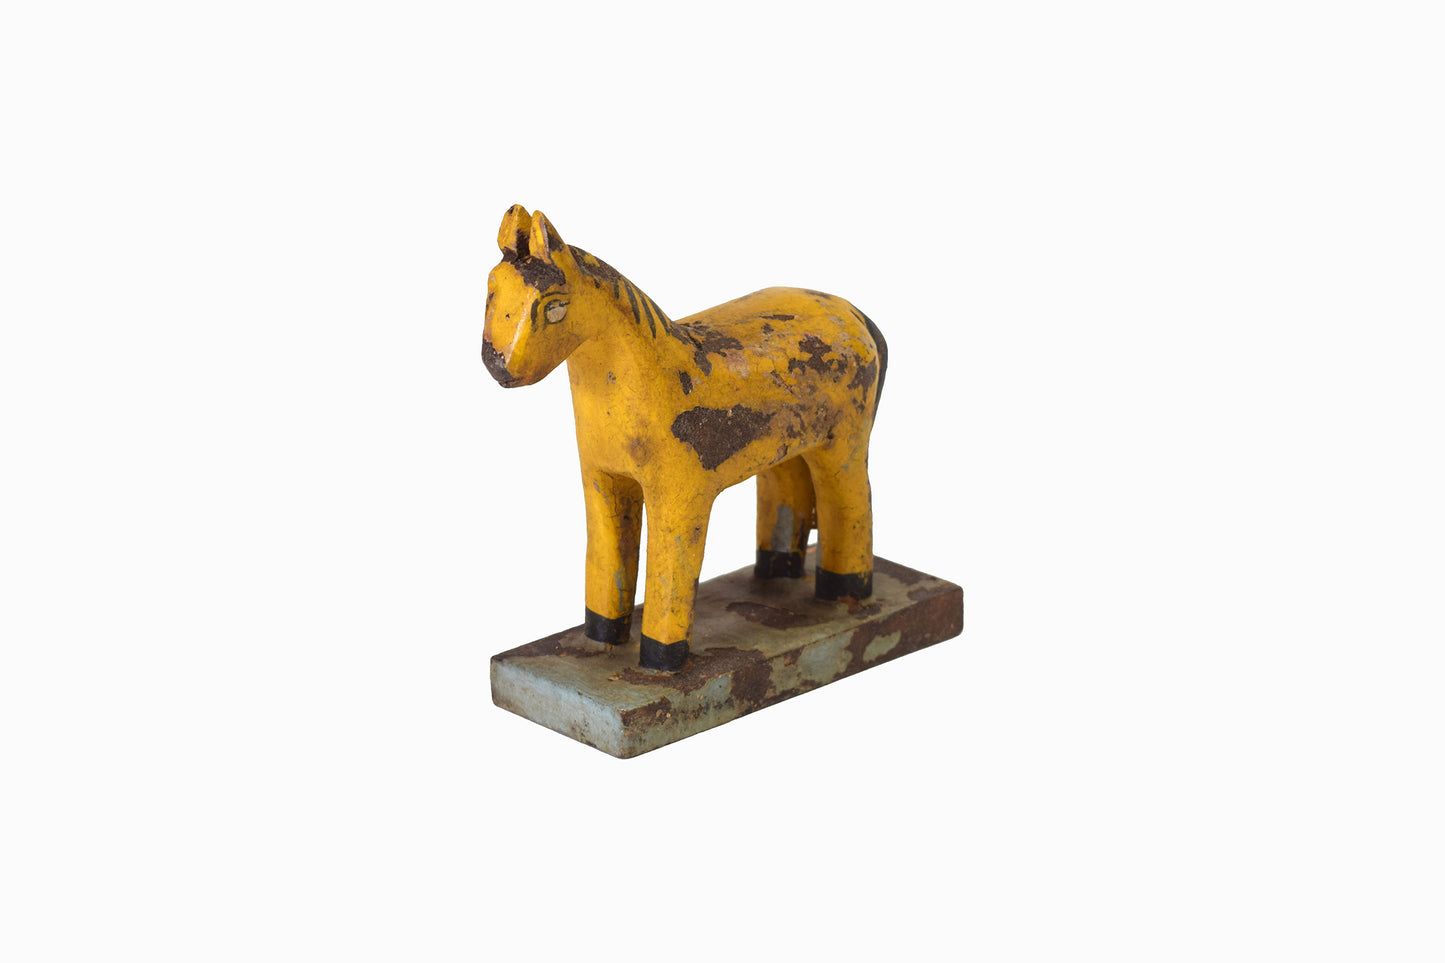 Pequeño Caballo Decorativo de Madera Pintado de Amarillo - Ref 2